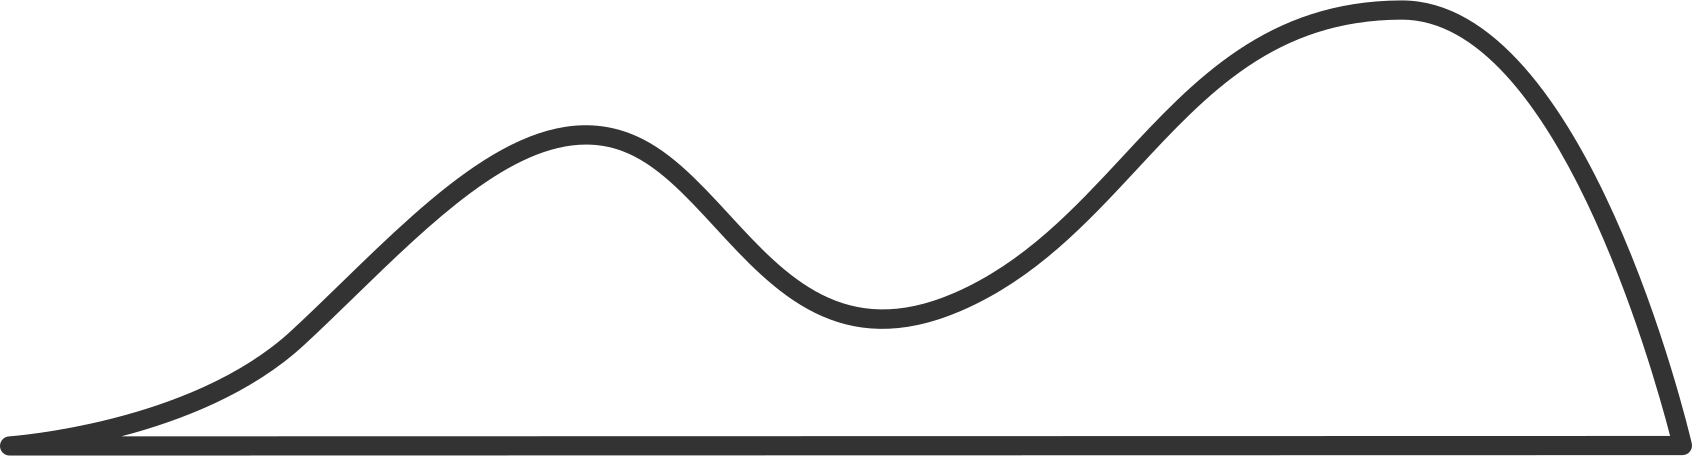 wavy cloud with black outline Illustration in PNG, SVG